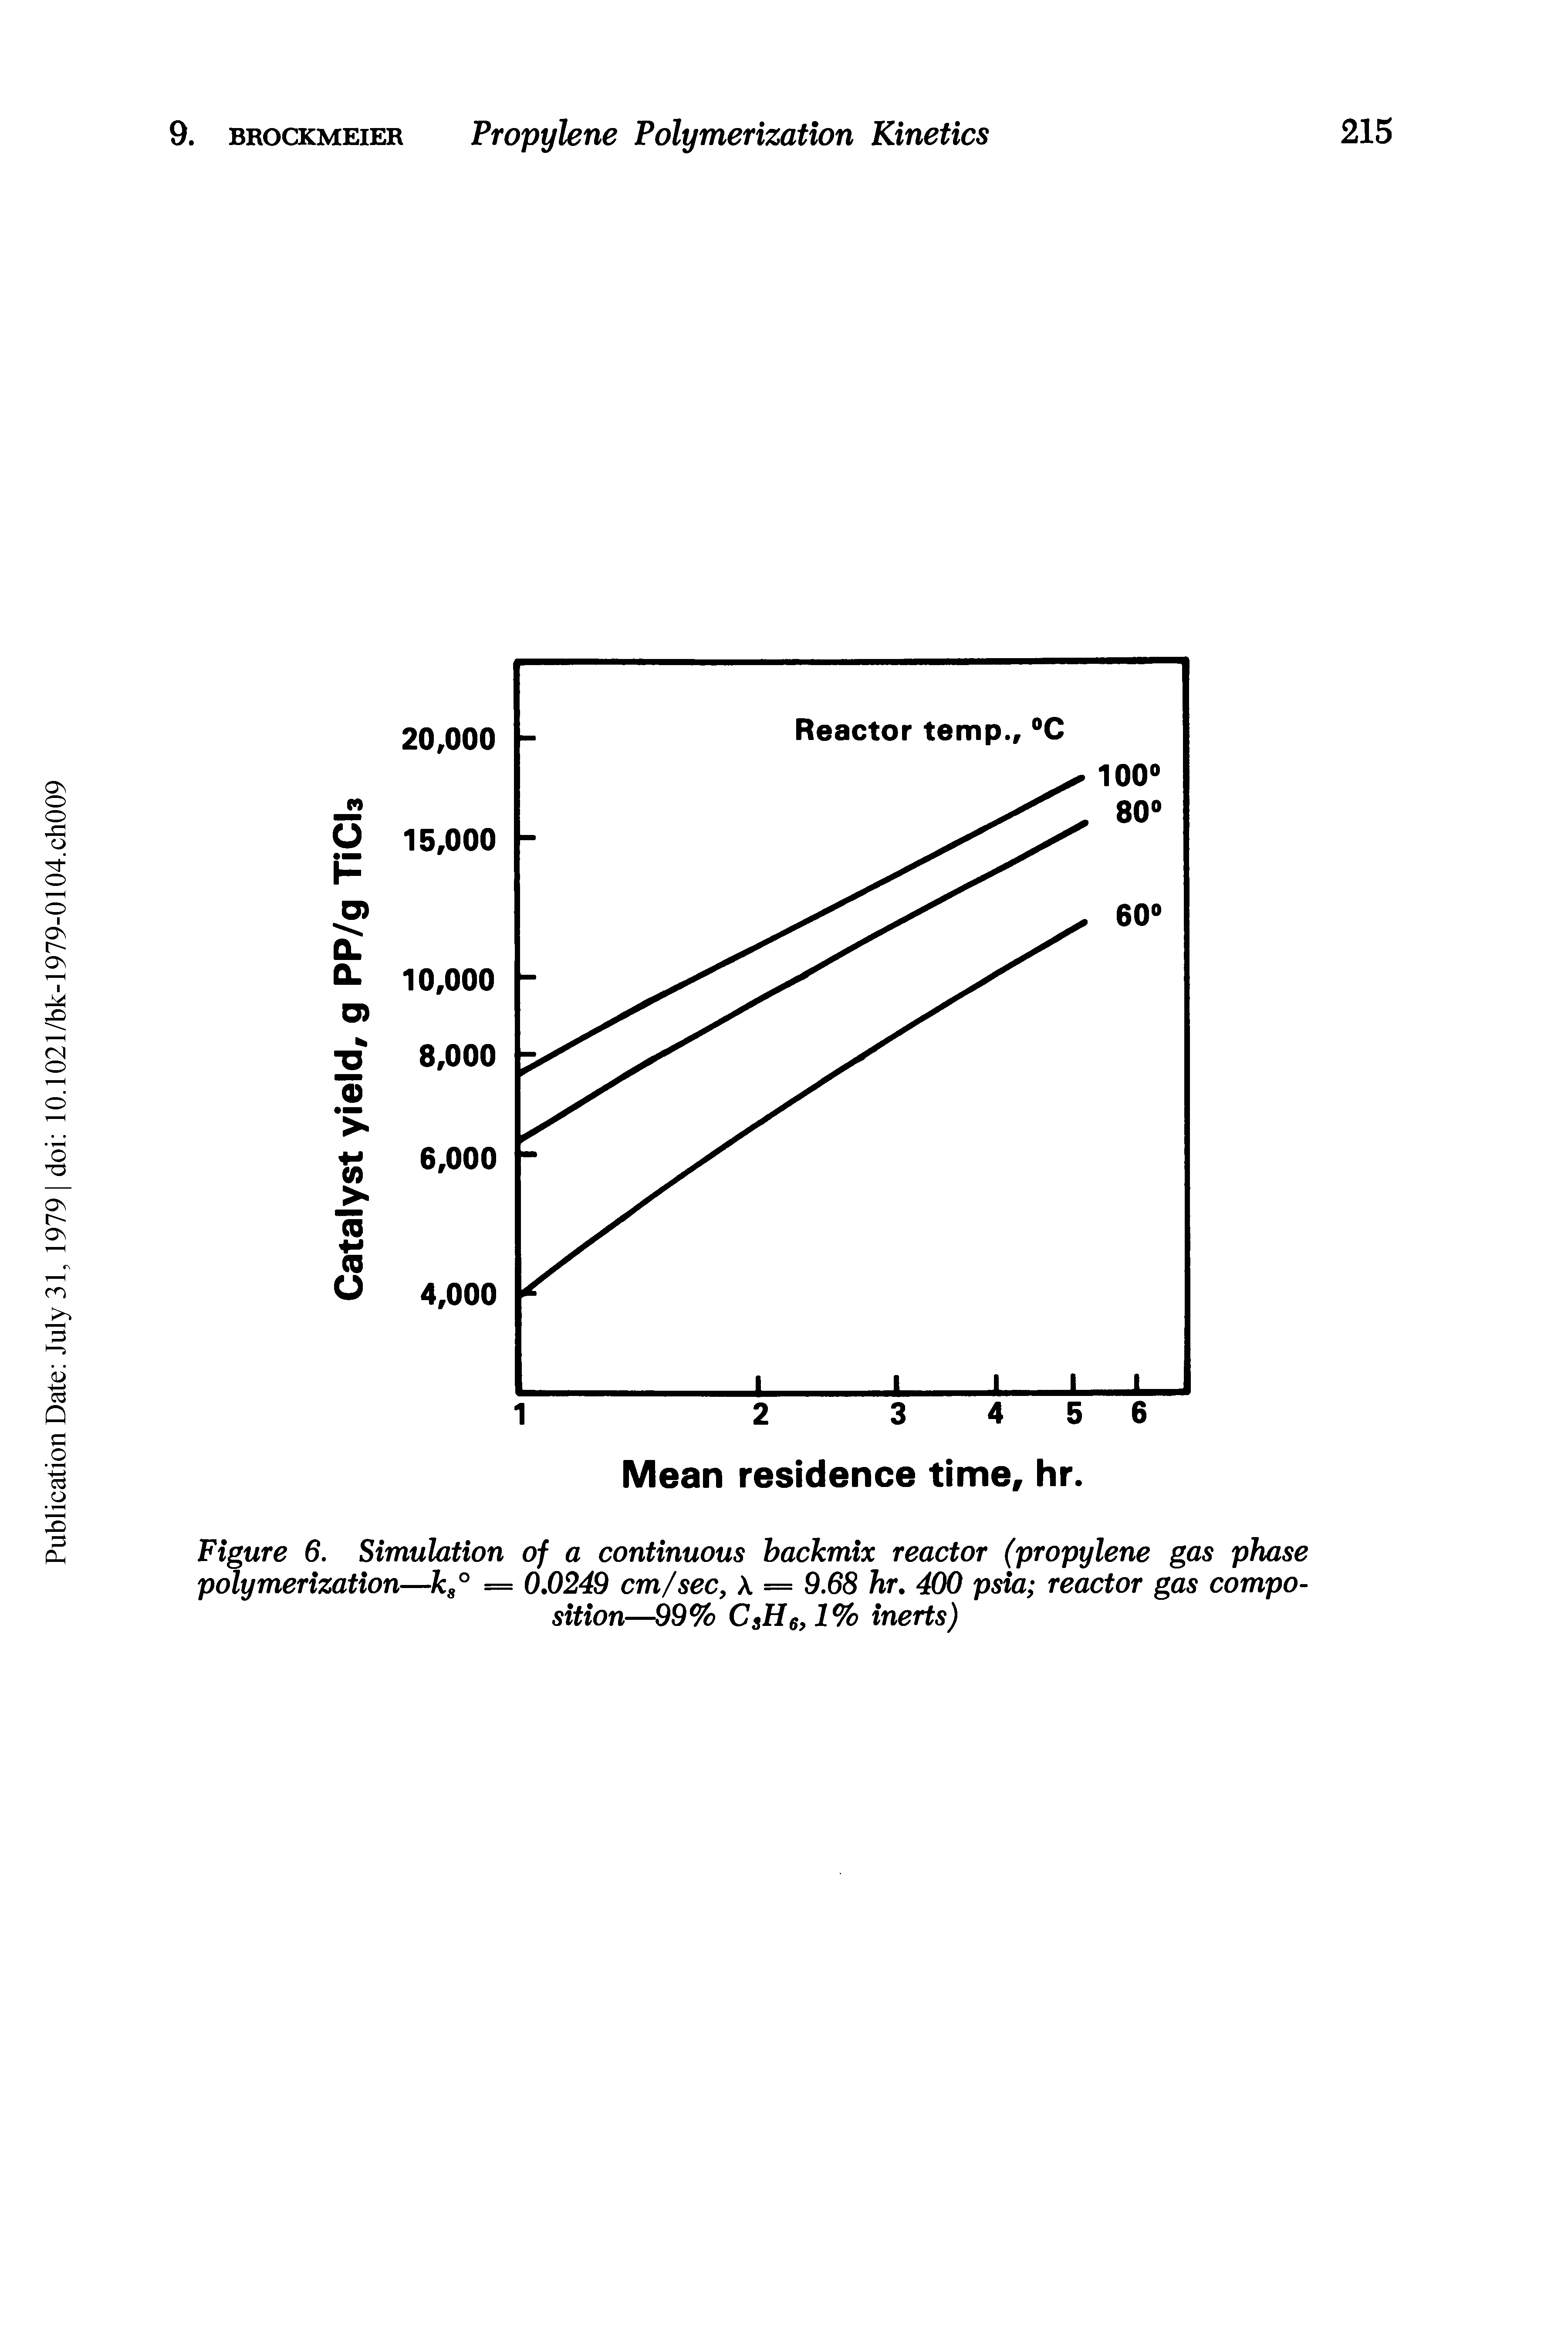 Figure 6. Simulation of a continuous backmix reactor (propylene gas phase polymerization—kg° = 0,0249 cm/sec, X = 9.68 hr, 400 psia reactor gas composition—99% CsH6,1% inerts)...